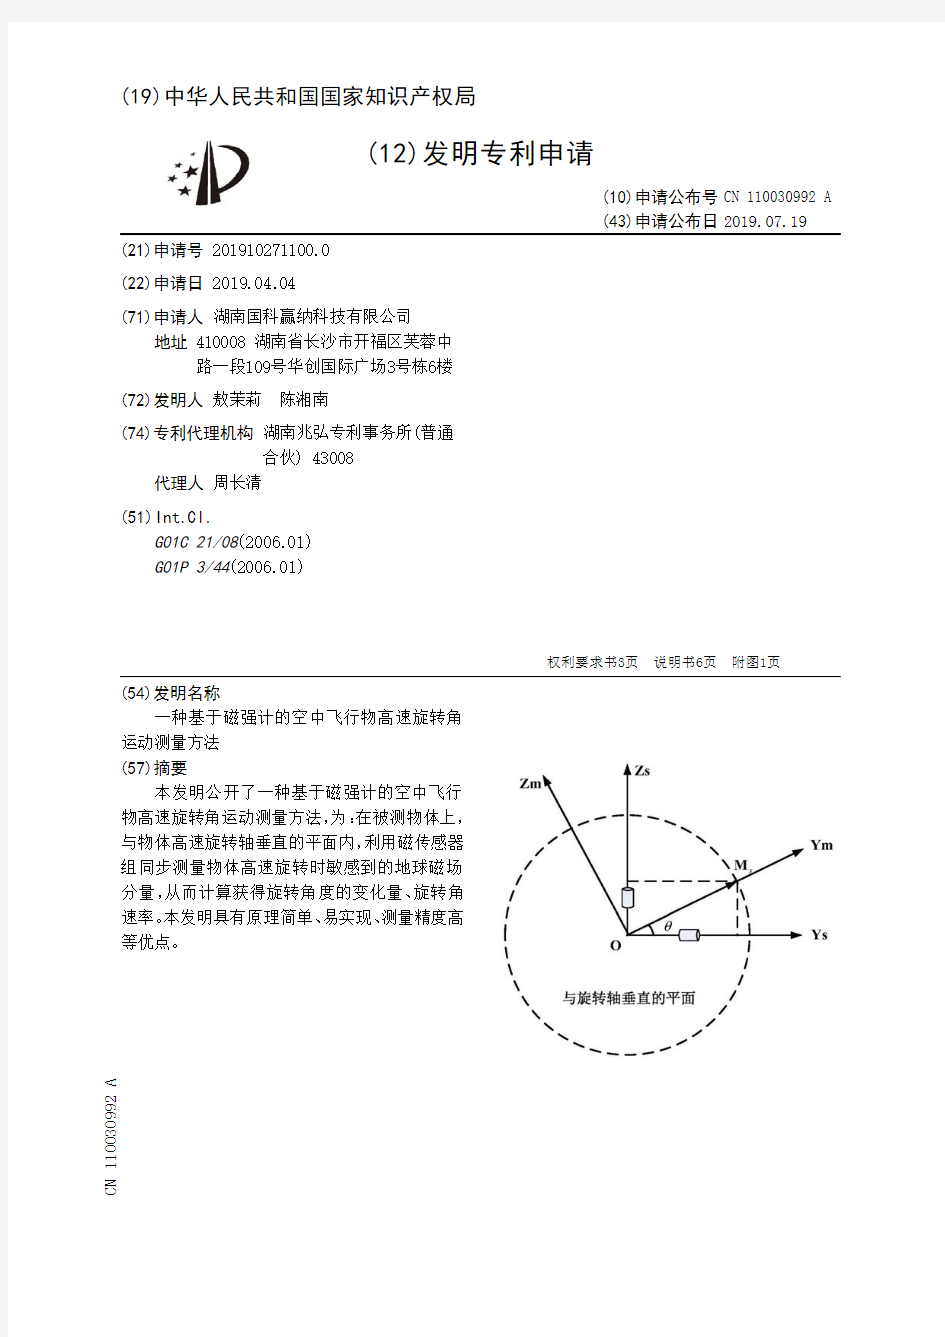 【CN110030992A】一种基于磁强计的空中飞行物高速旋转角运动测量方法【专利】